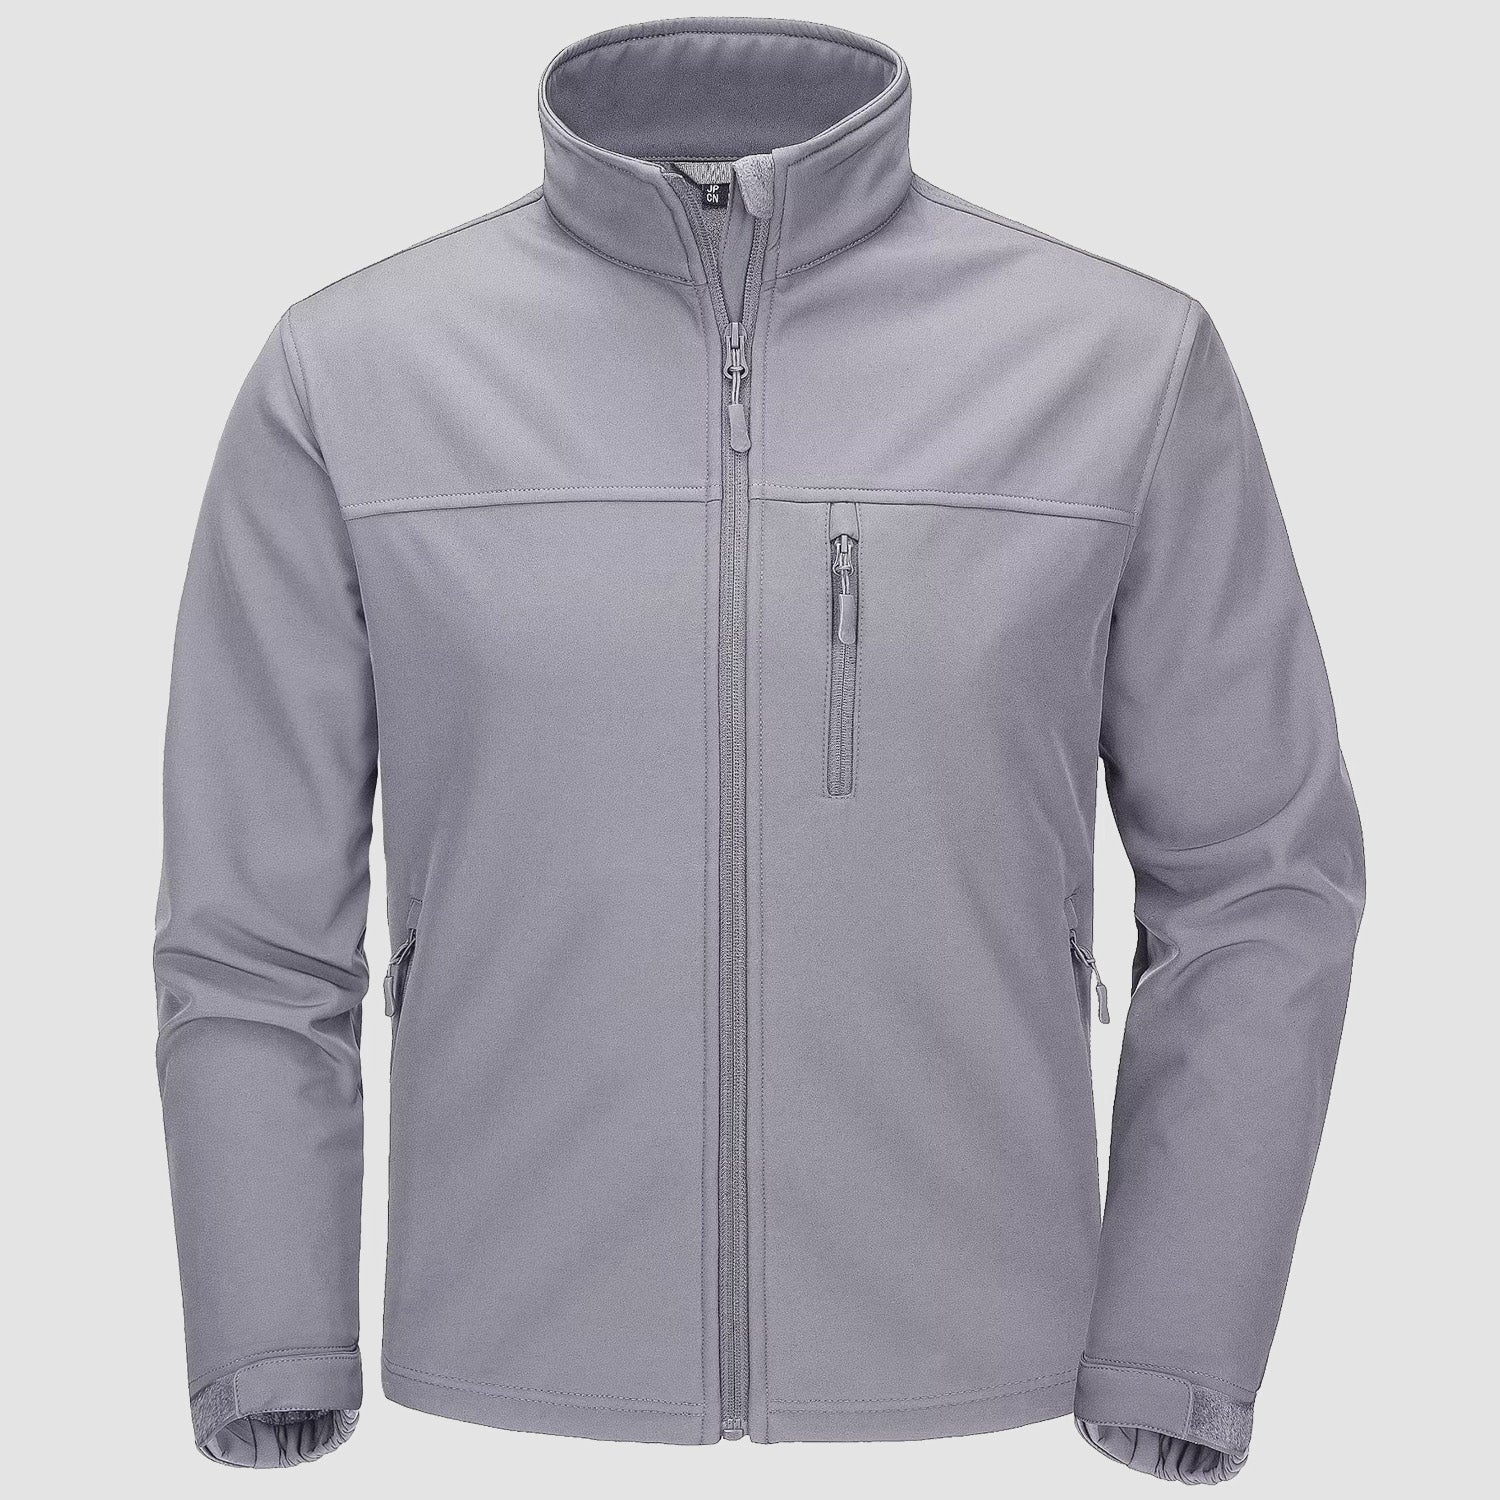 Men's Fleece Lined Jacket Lightweight Waterproof Jacket